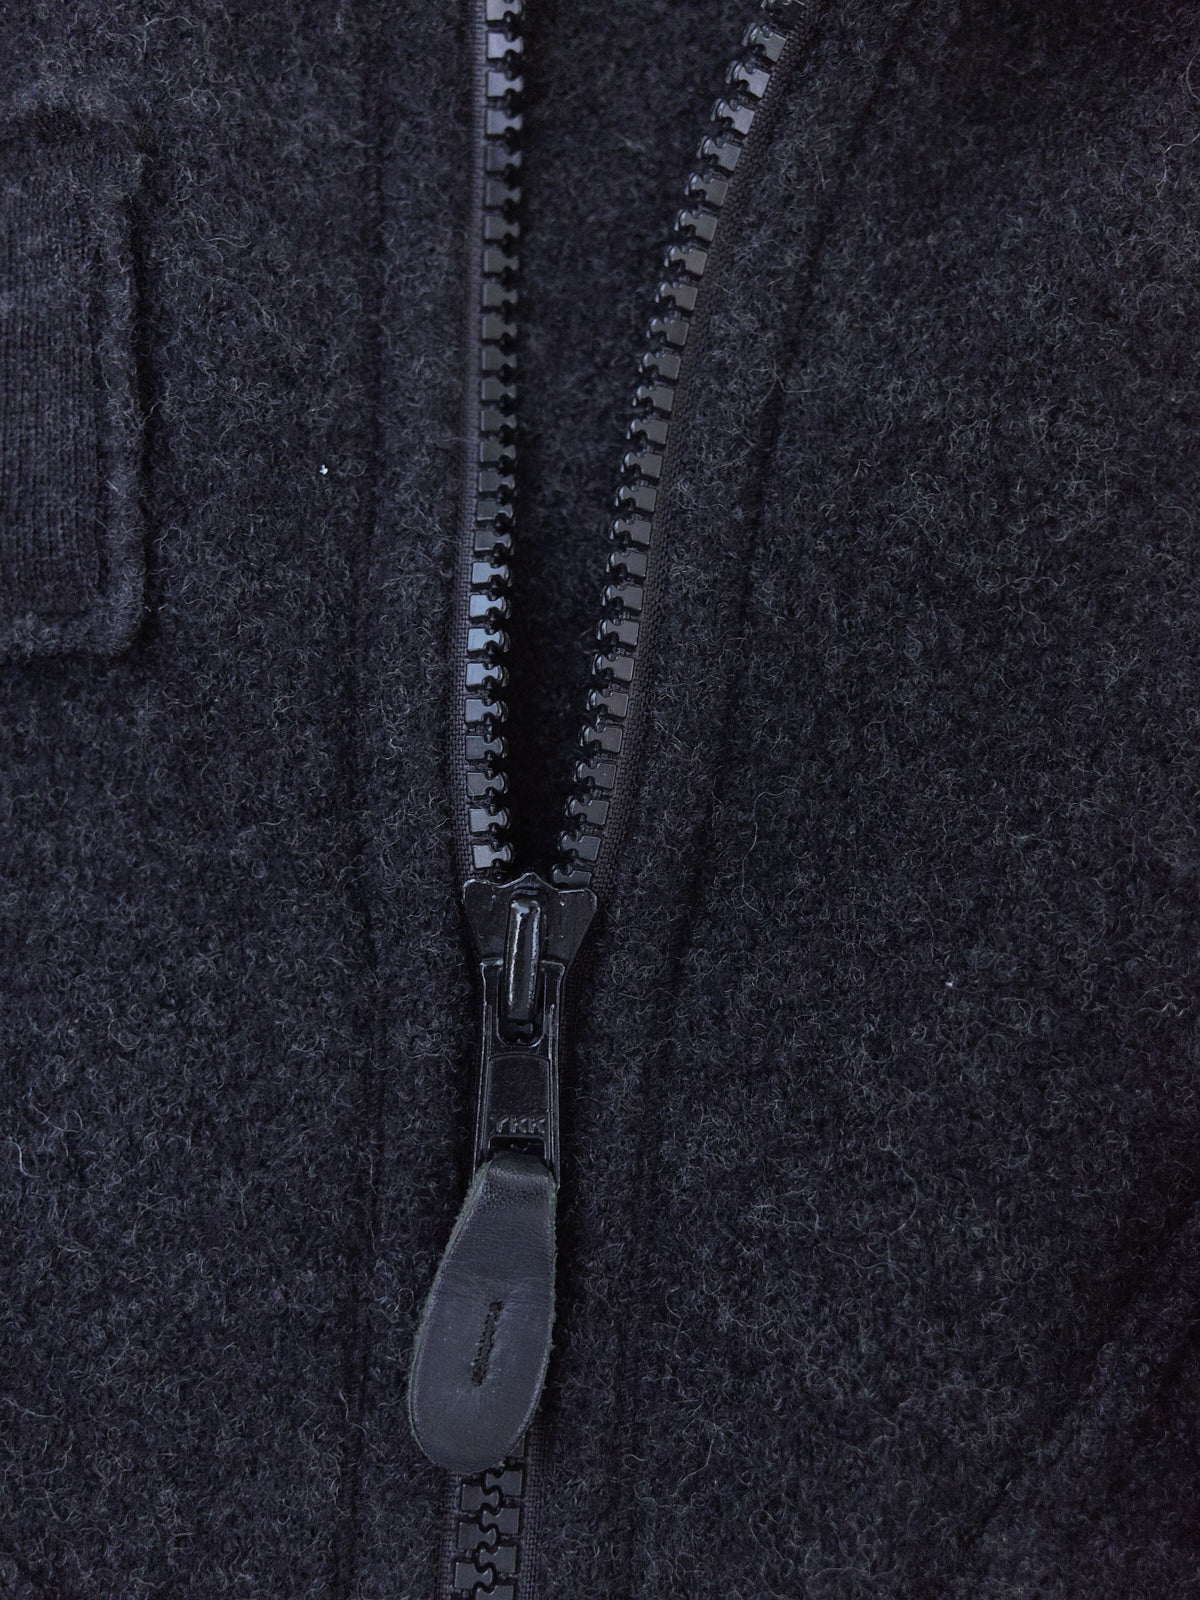 Zucca grey knit wool double pocket bomber jacket - womens S